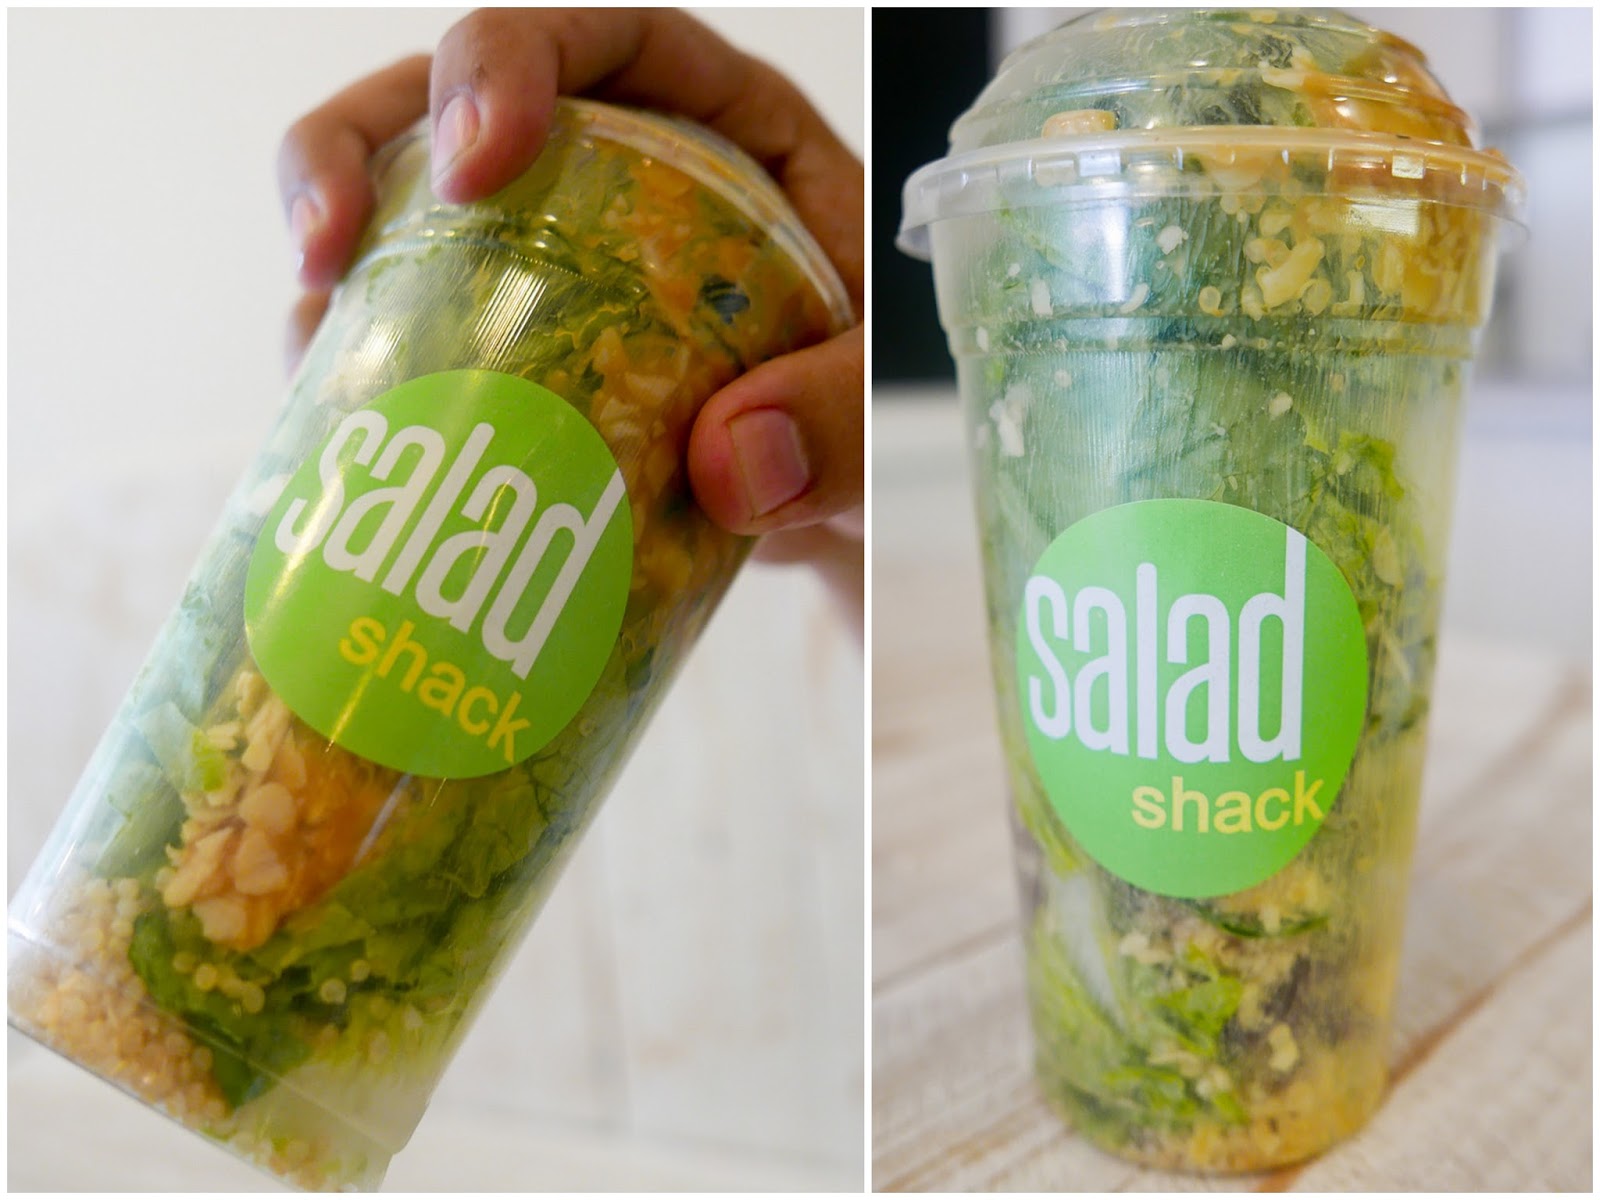 3. Salad Shack